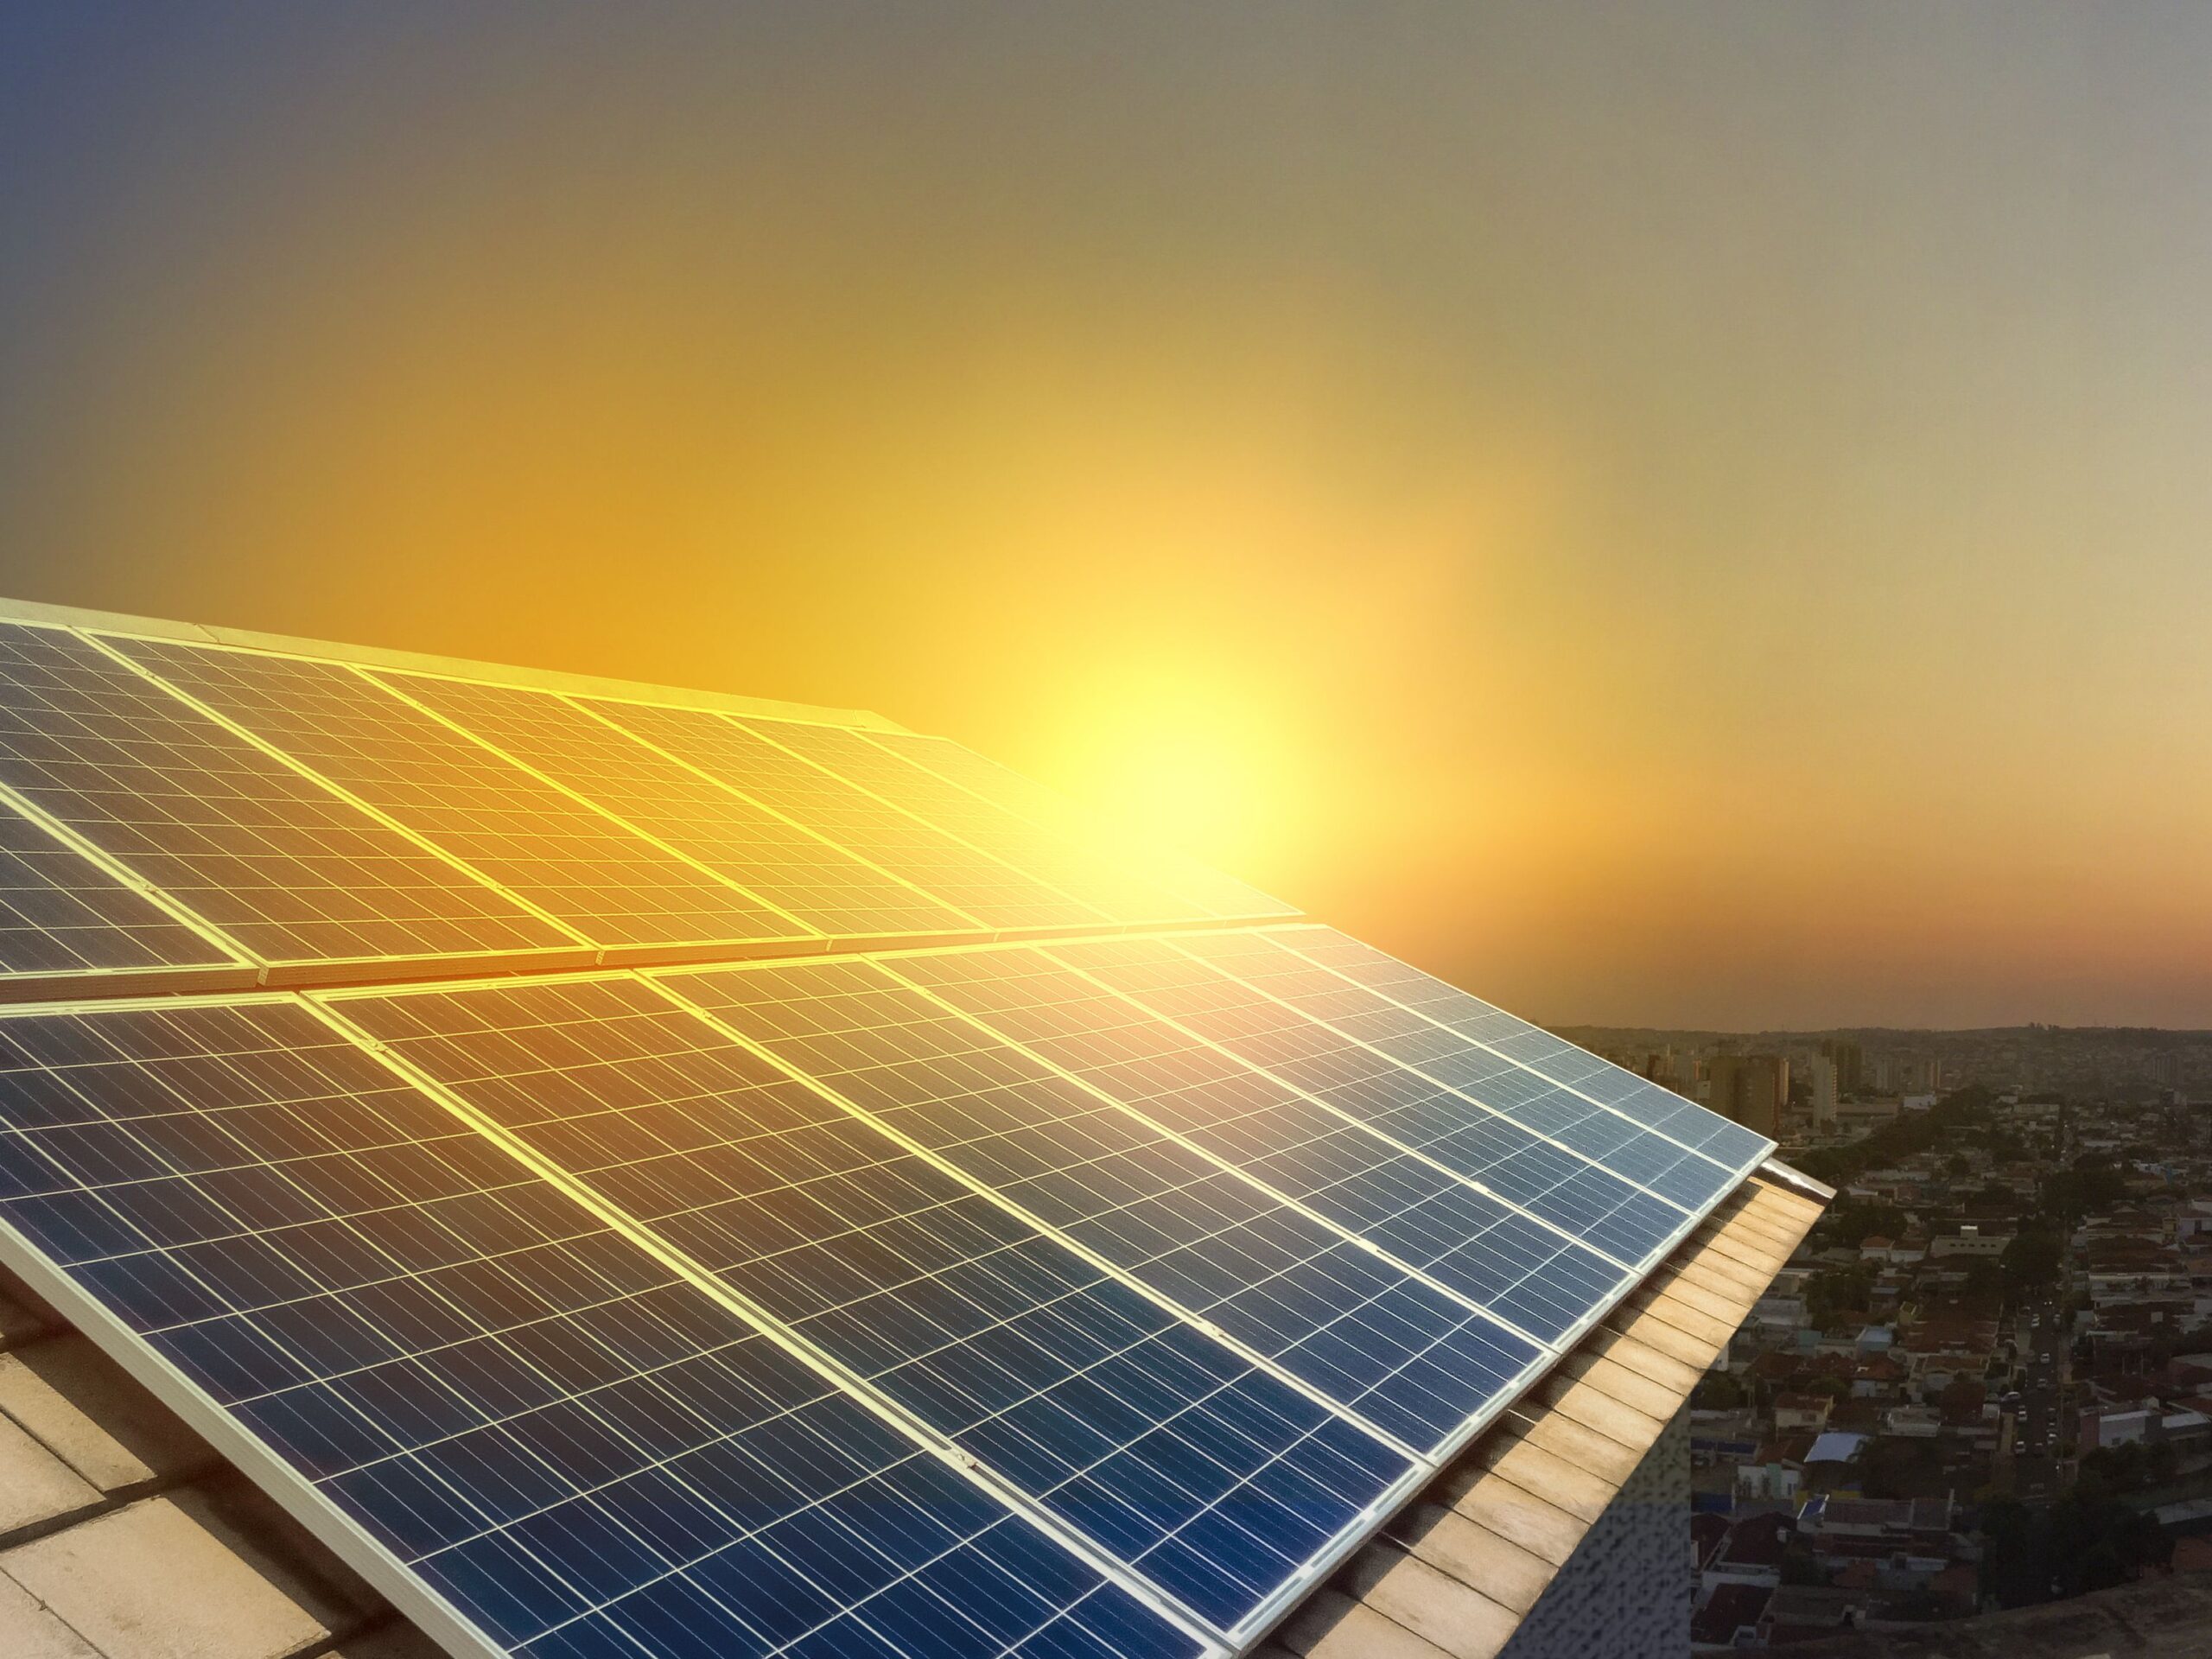 solar-panel-photovoltaic-installation-on-a-roof--alternative-electricity-source-884806548-5c5b67b9c9e77c000156659b